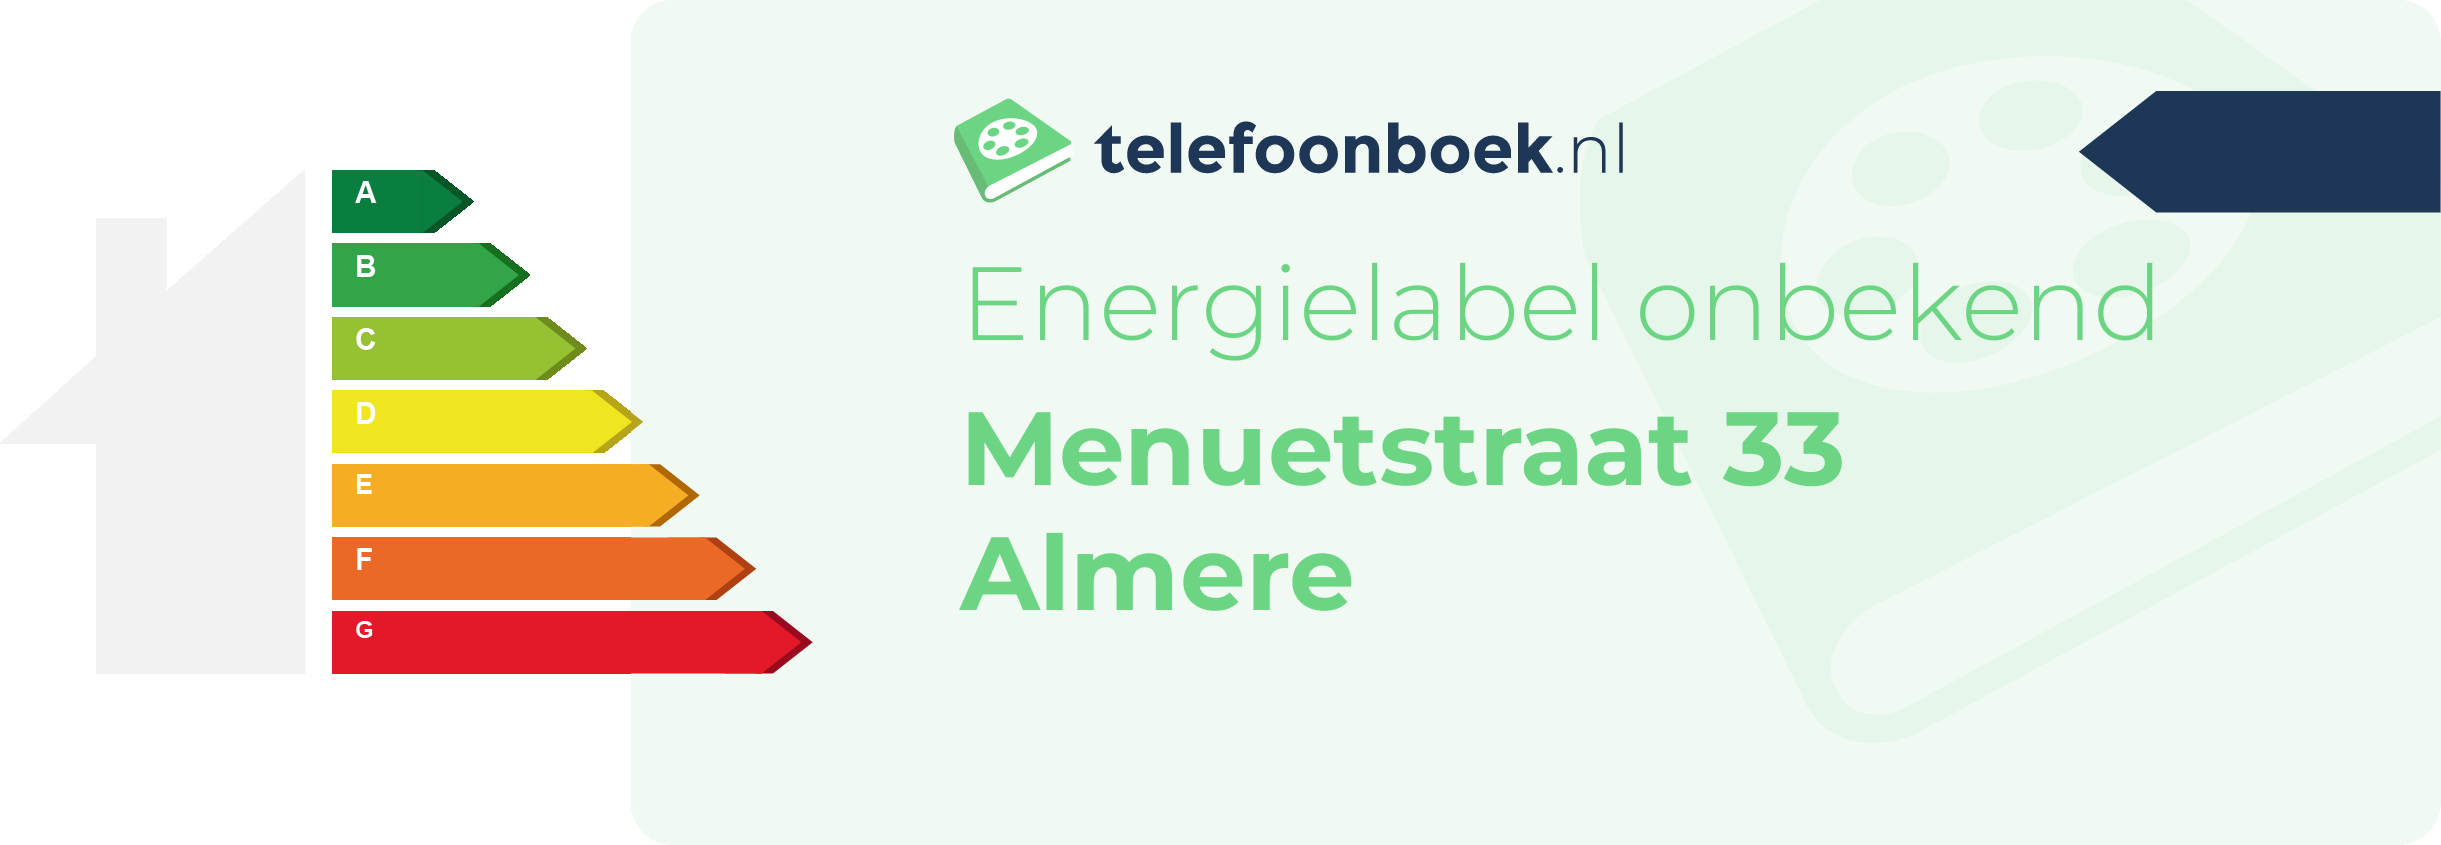 Energielabel Menuetstraat 33 Almere